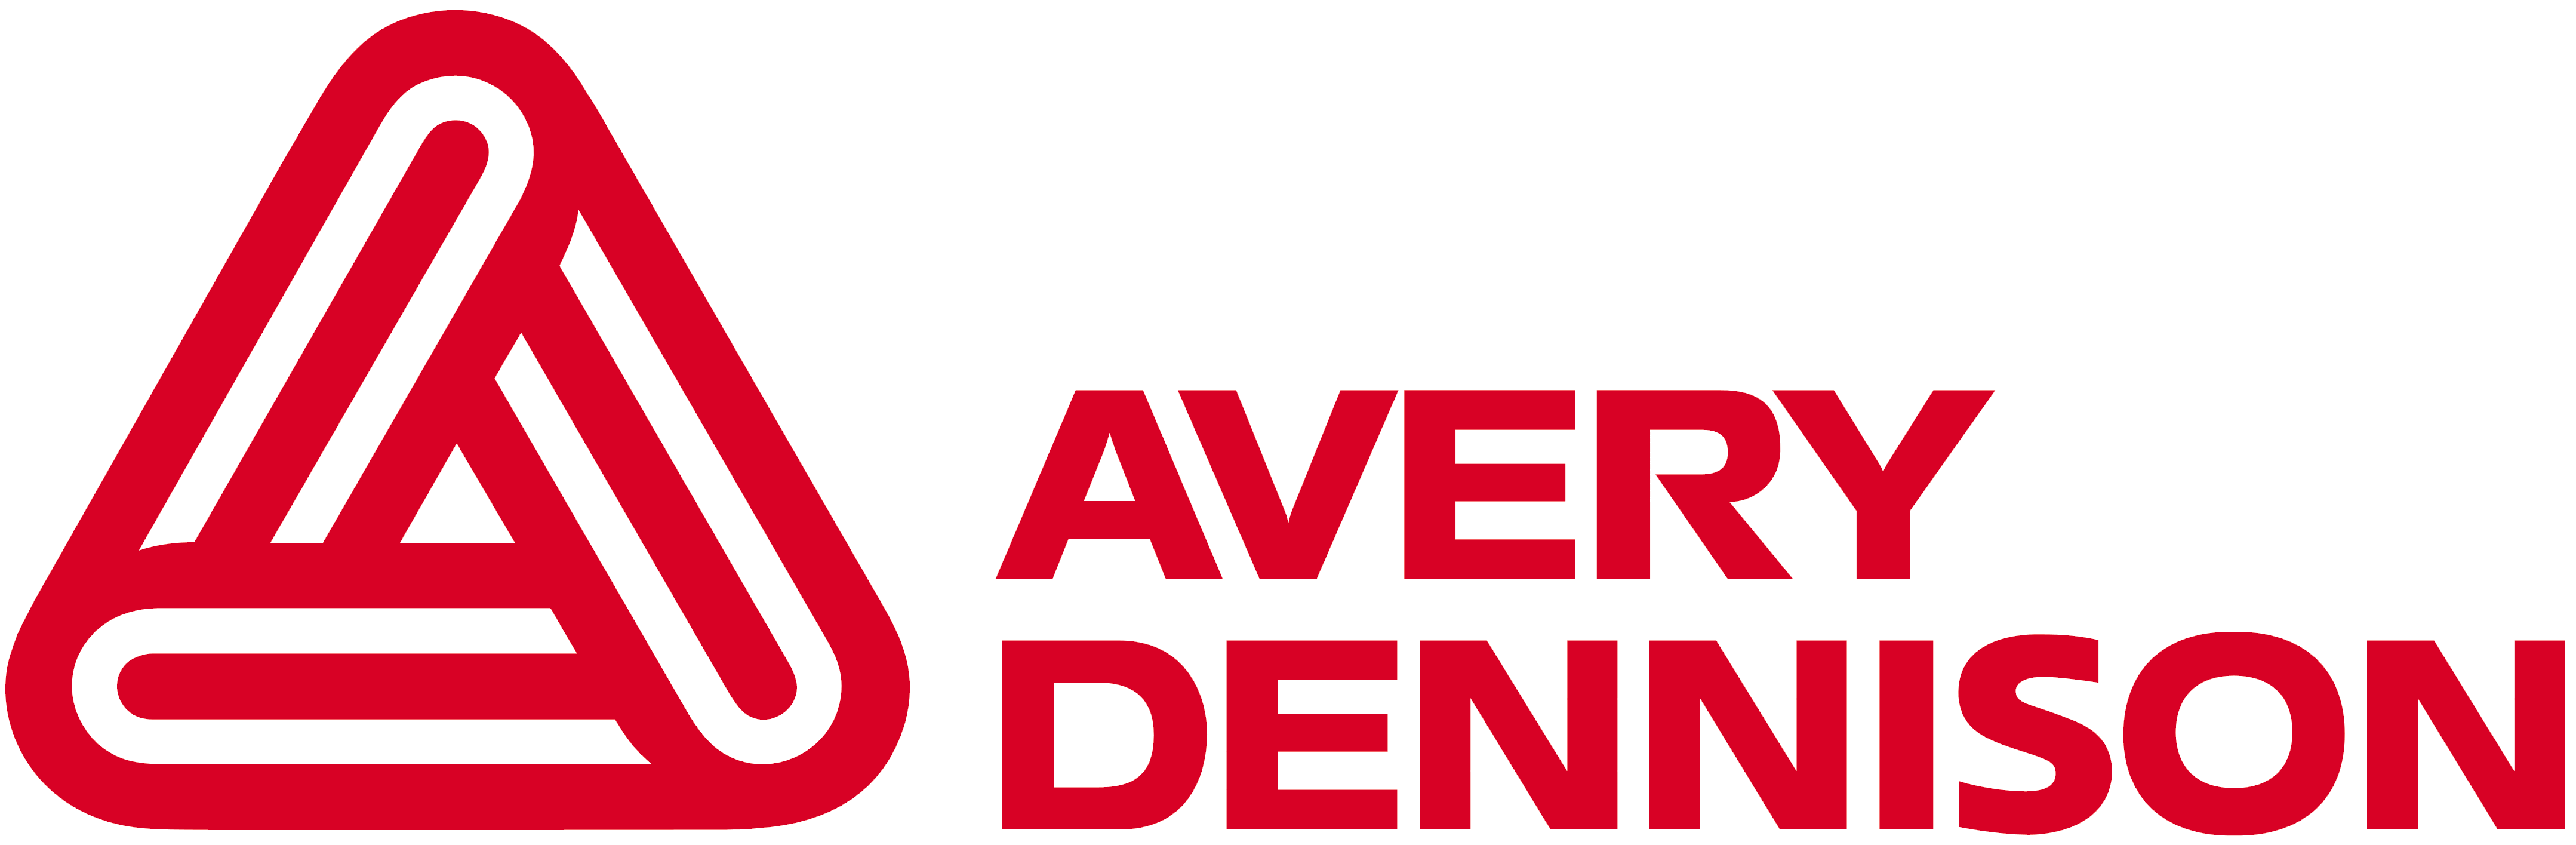 Avery Dennison logo, logotype